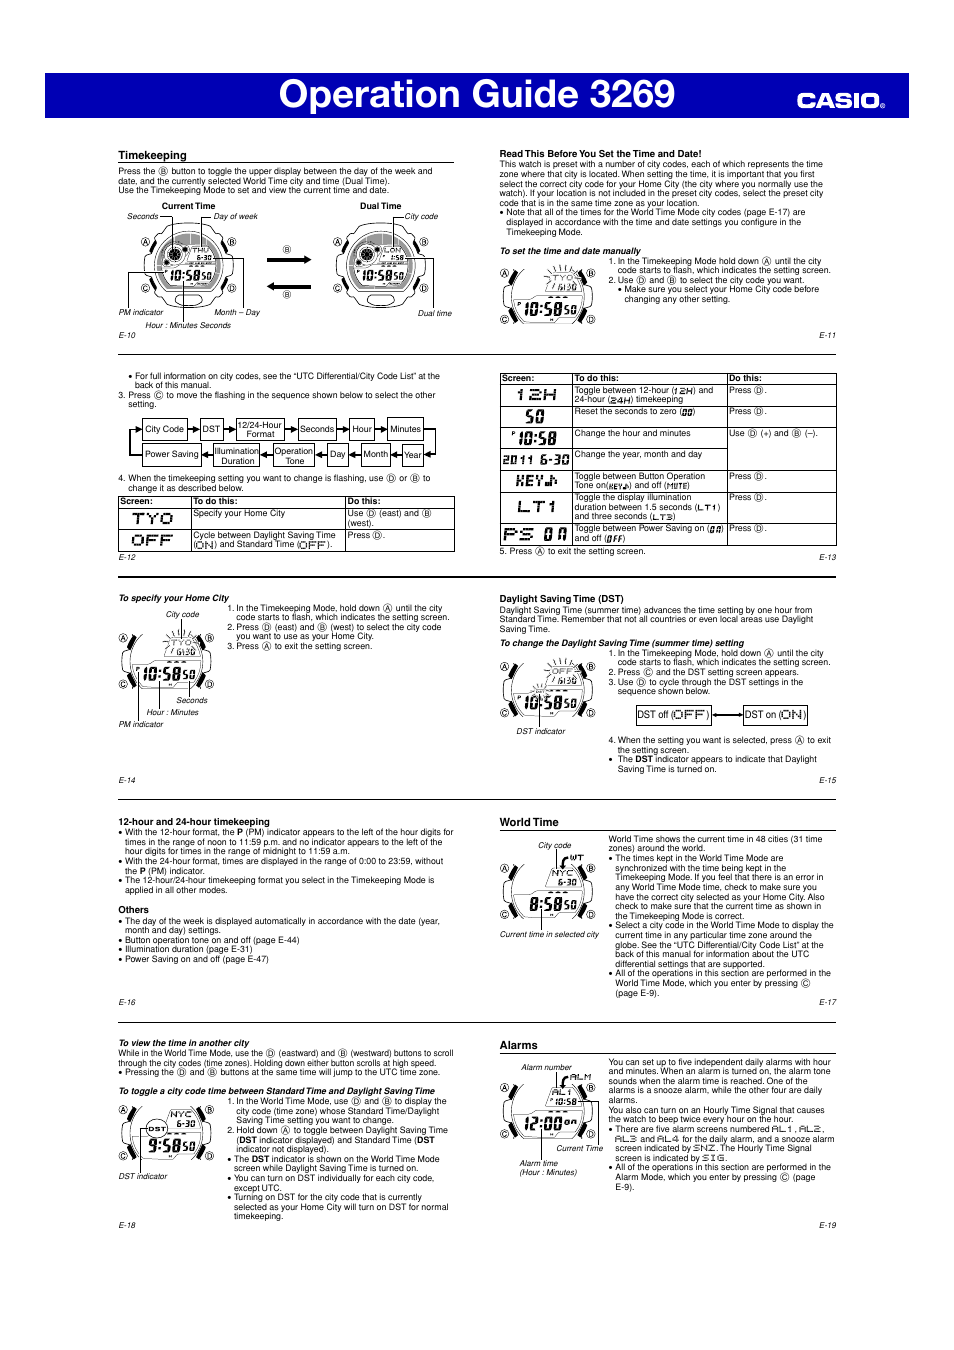 Operation guide 3269 | G-Shock GR-8900 User Manual | Page 2 / 6 | Original  mode